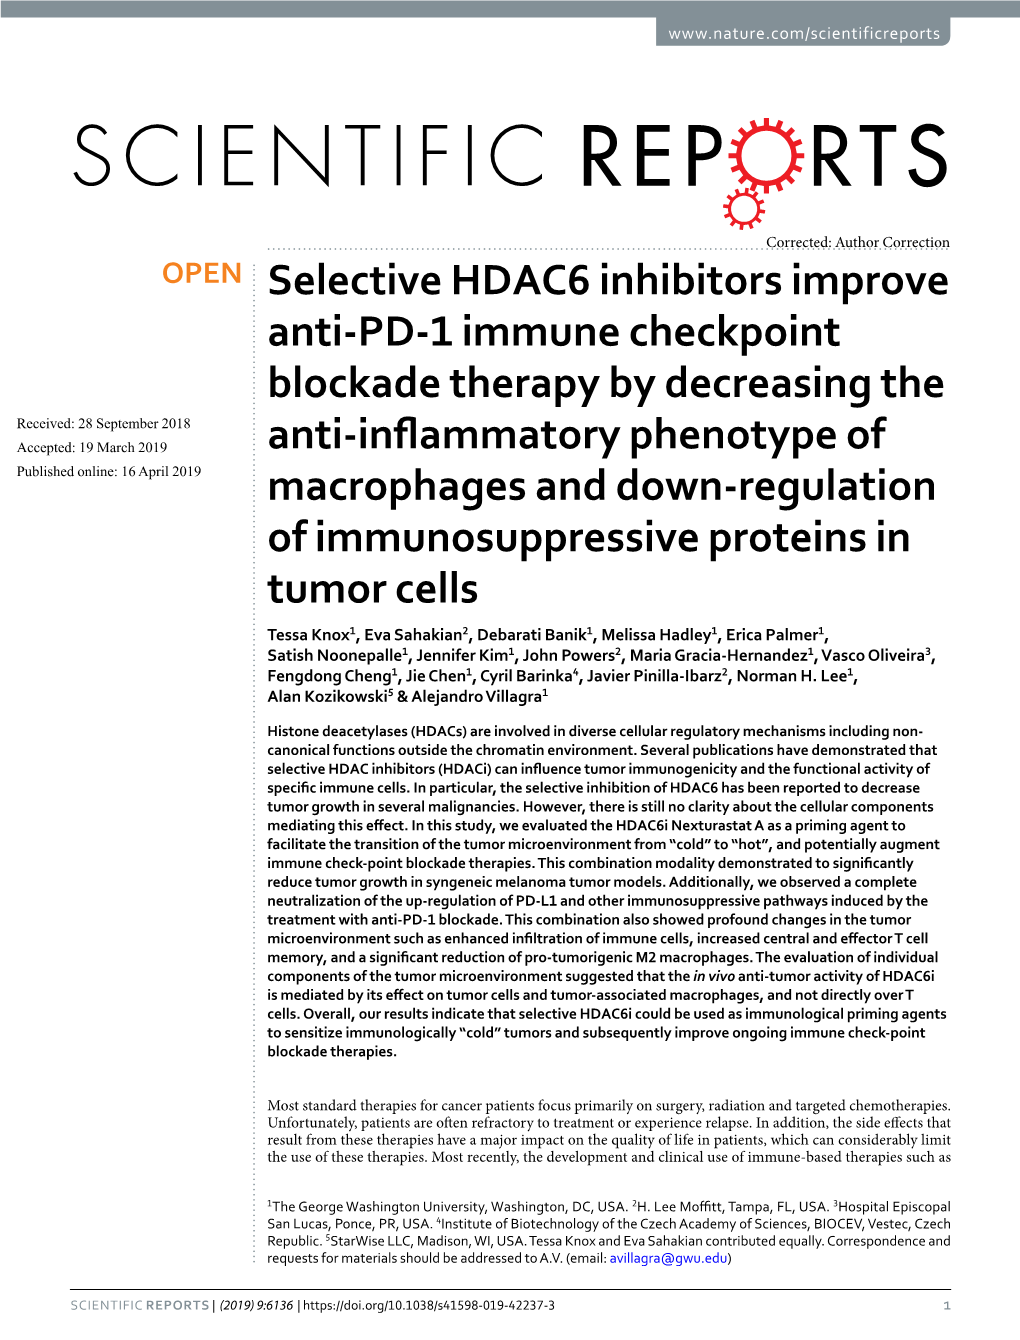 Selective HDAC6 Inhibitors Improve Anti-PD-1 Immune Checkpoint Blockade Therapy by Decreasing the Anti-Inflammatory Phenotype Of